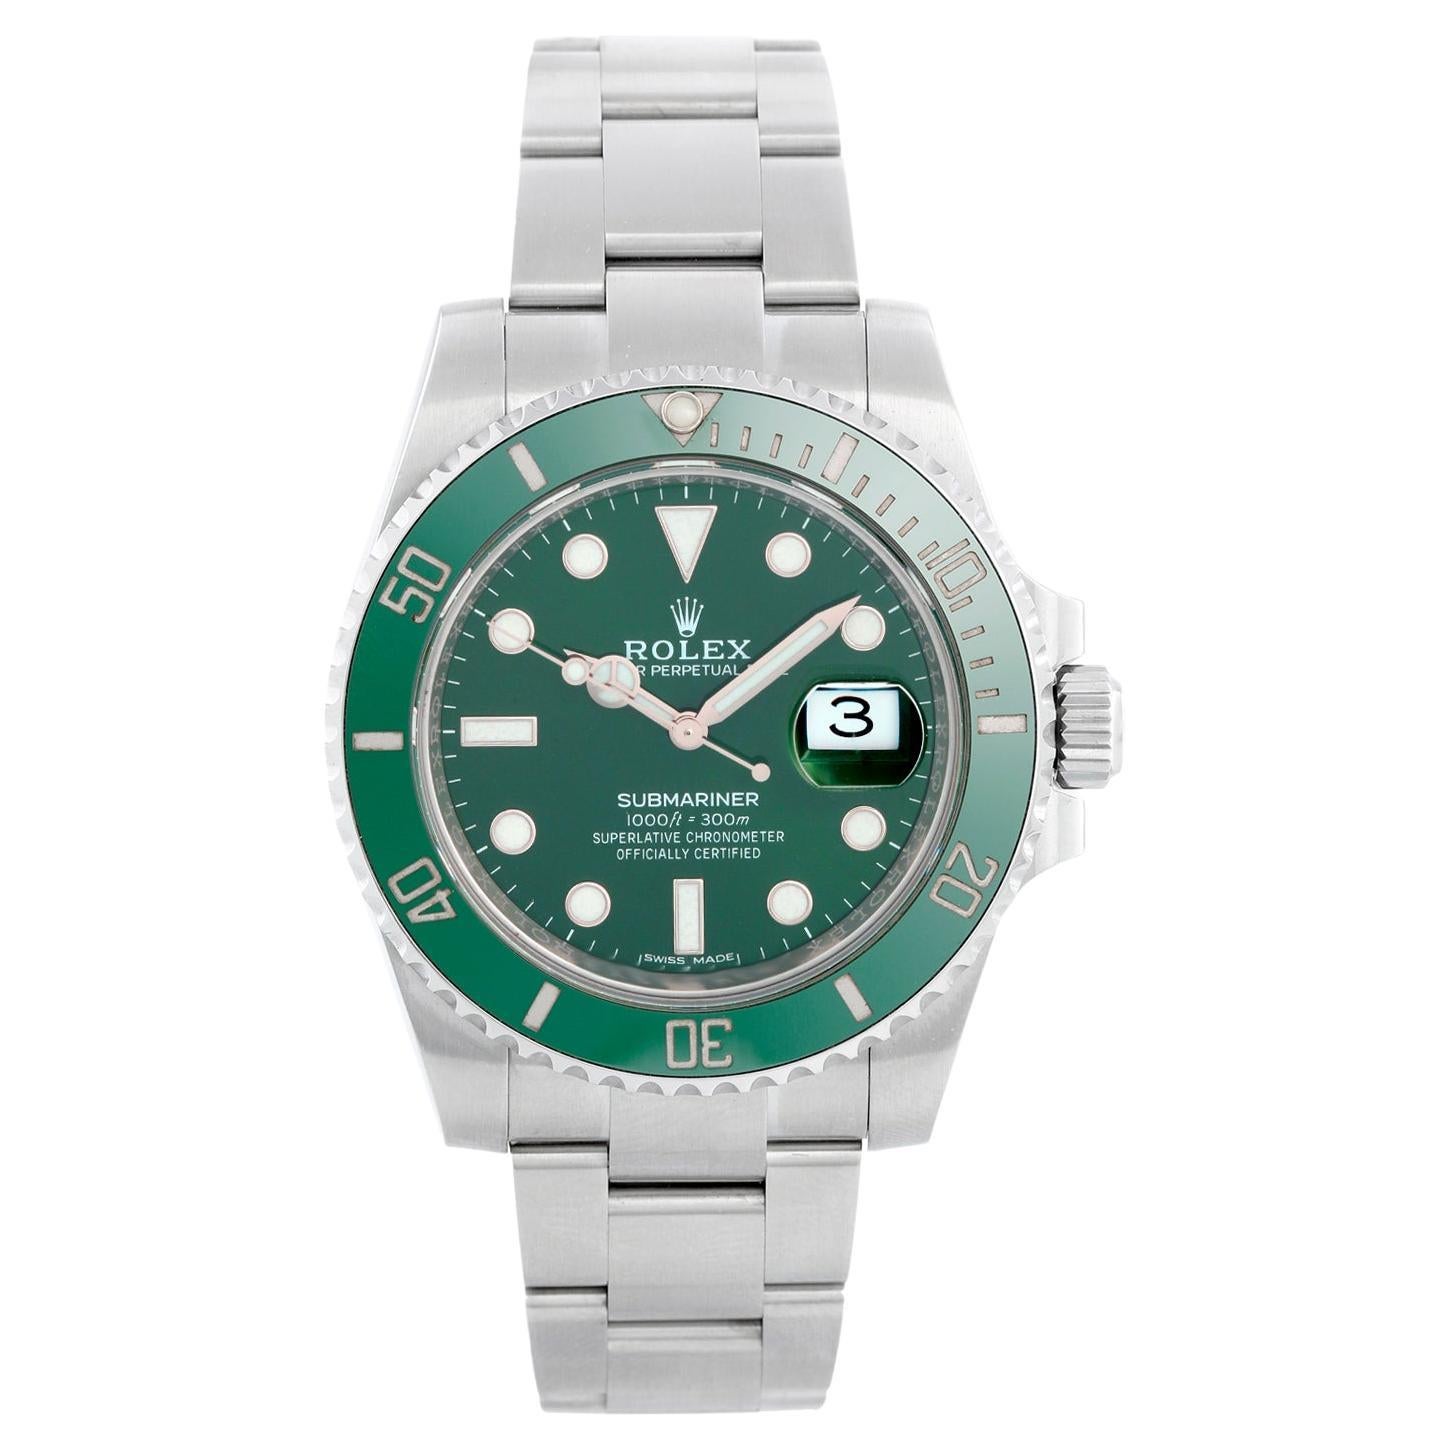 Rolex Submariner Men's Stainless Steel Green Dial Watch 116610LV